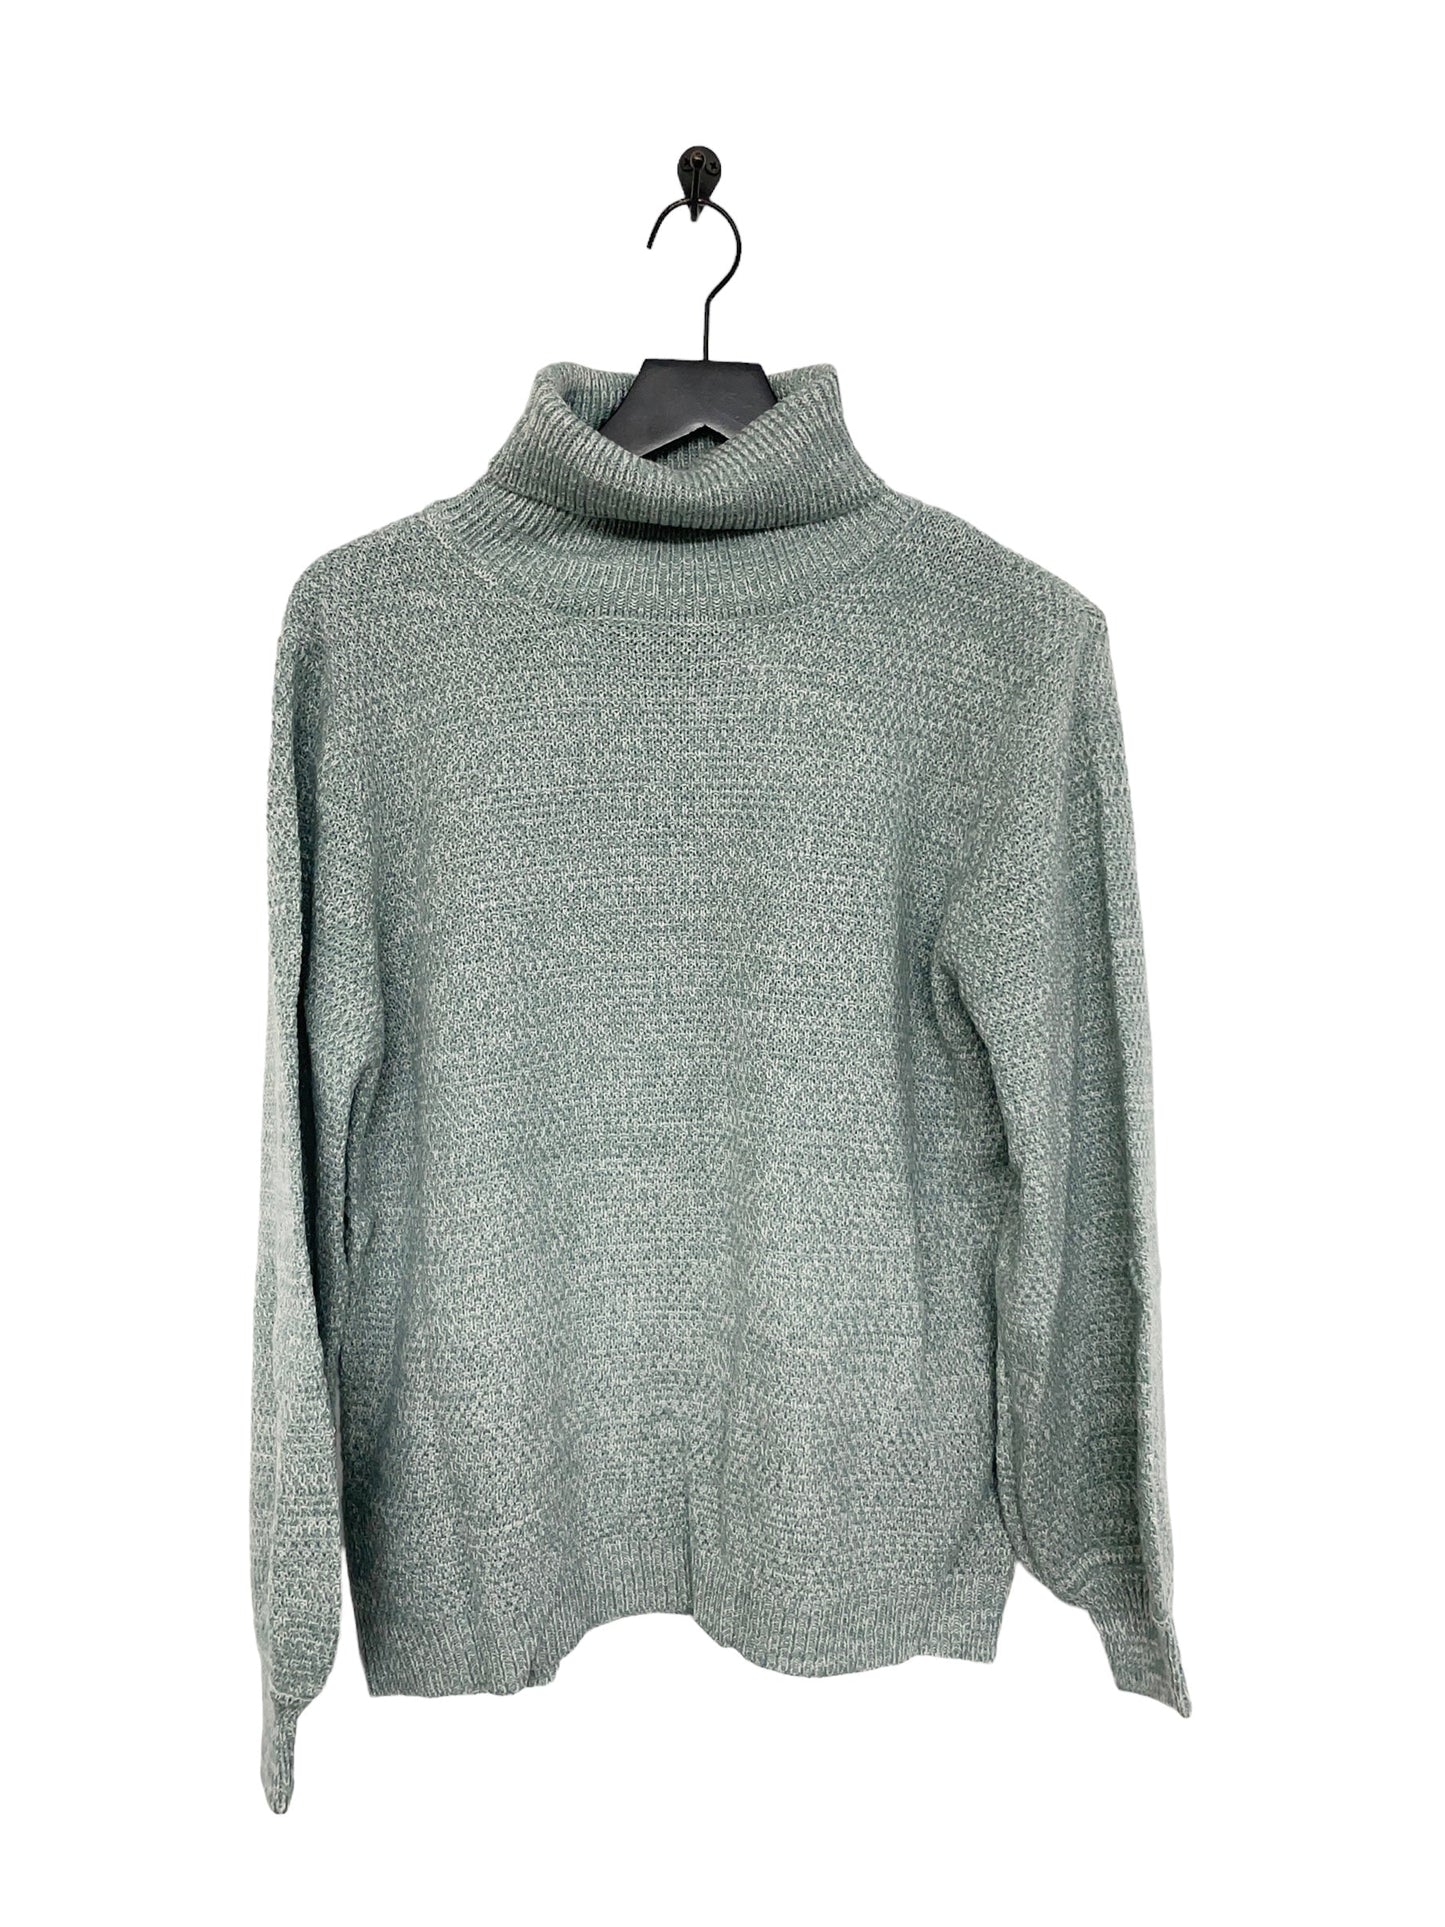 Slate Blue Sweater Zenana Outfitters, Size S